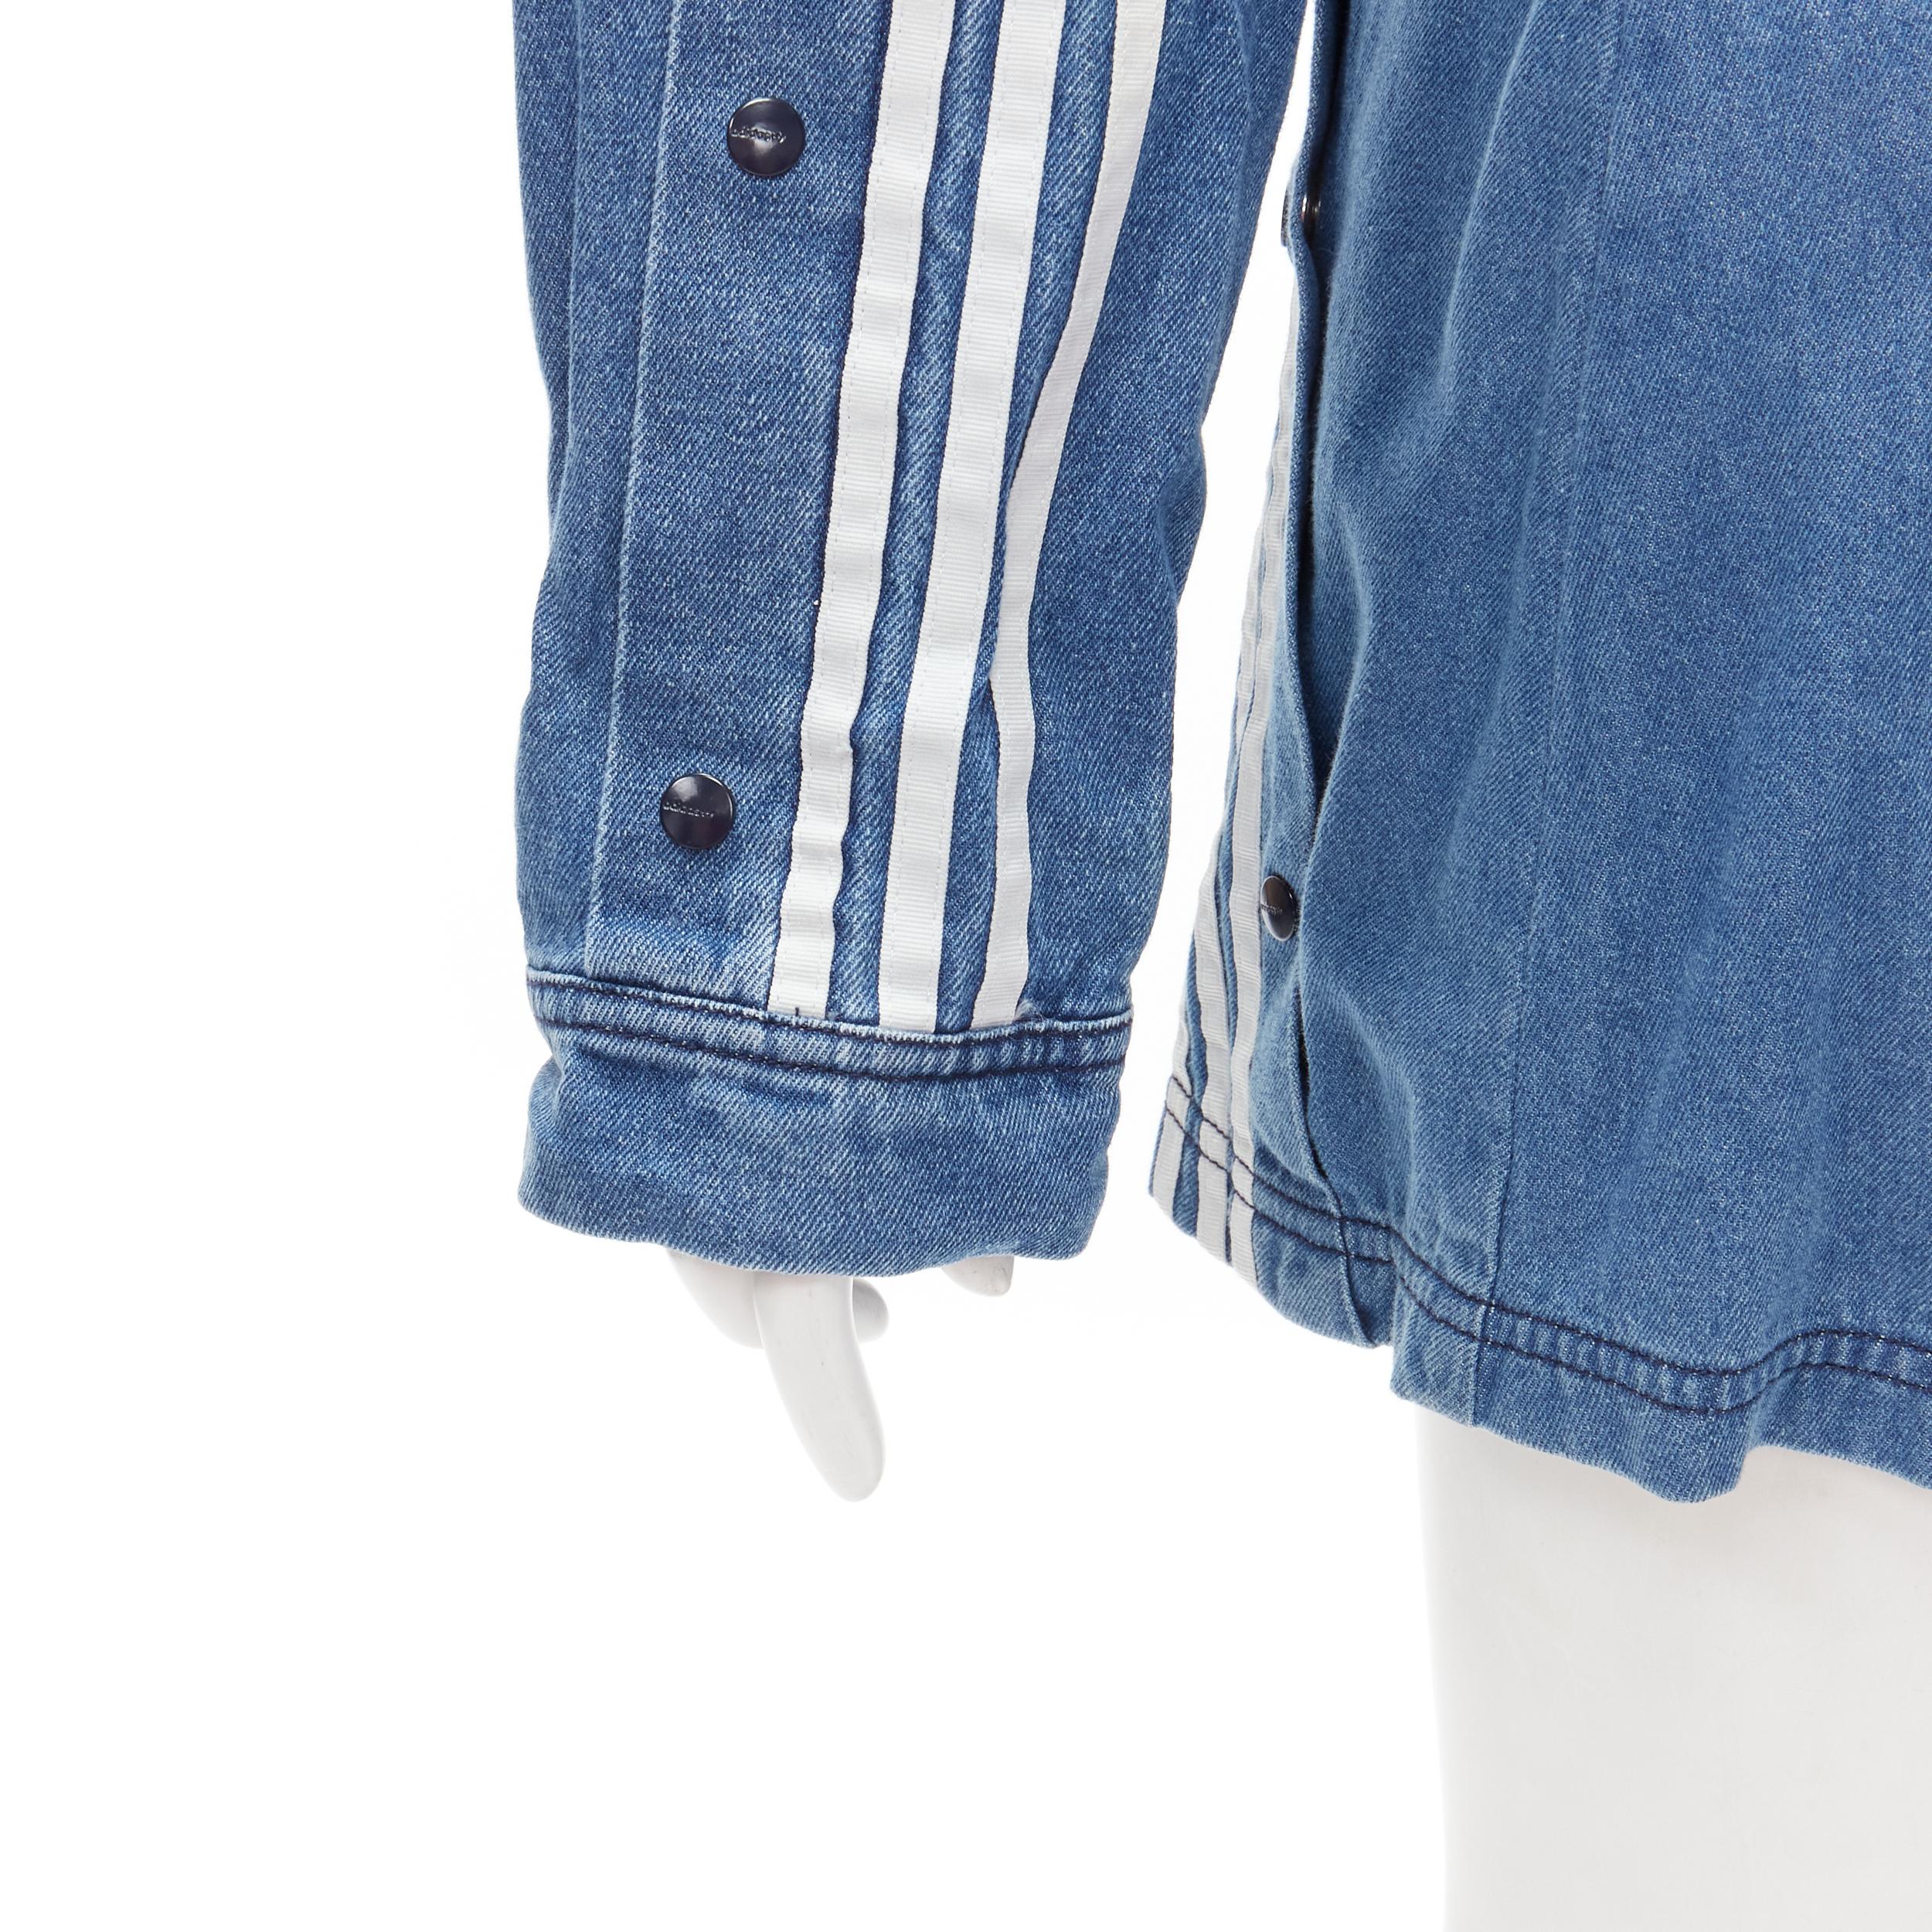 ADIDAS DANIELLE CATHARI blue denim patchwork cropped jacket mini skirt set S 4